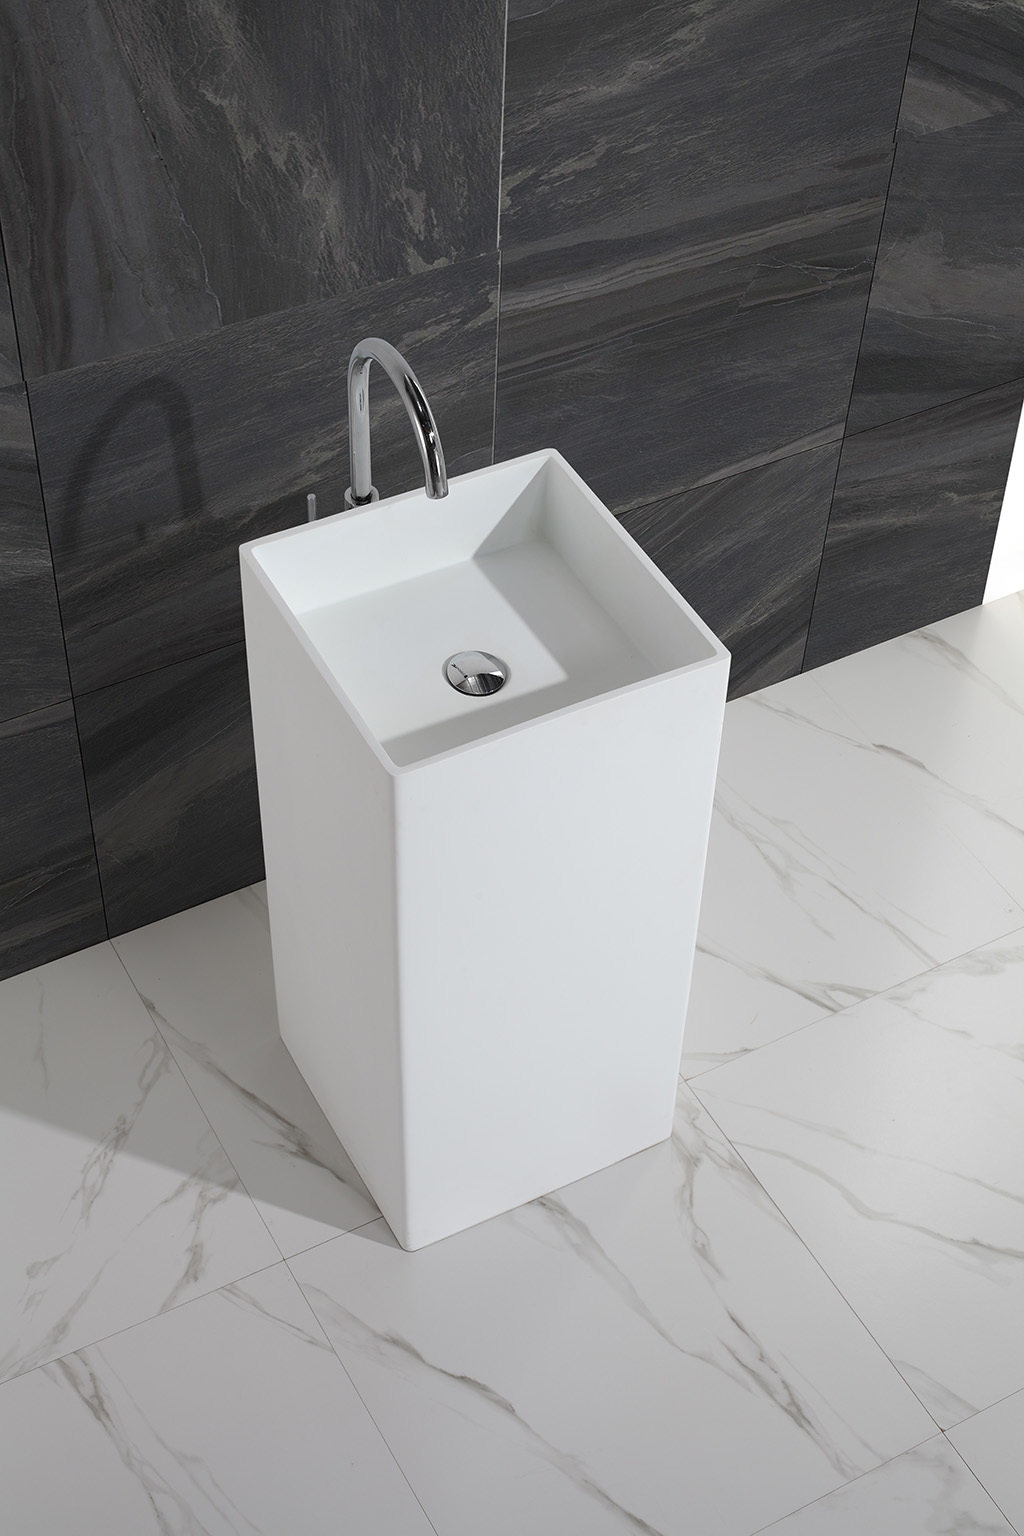 KingKonree solid freestanding basin sinkfree standing wash hand basins gel for bathroom